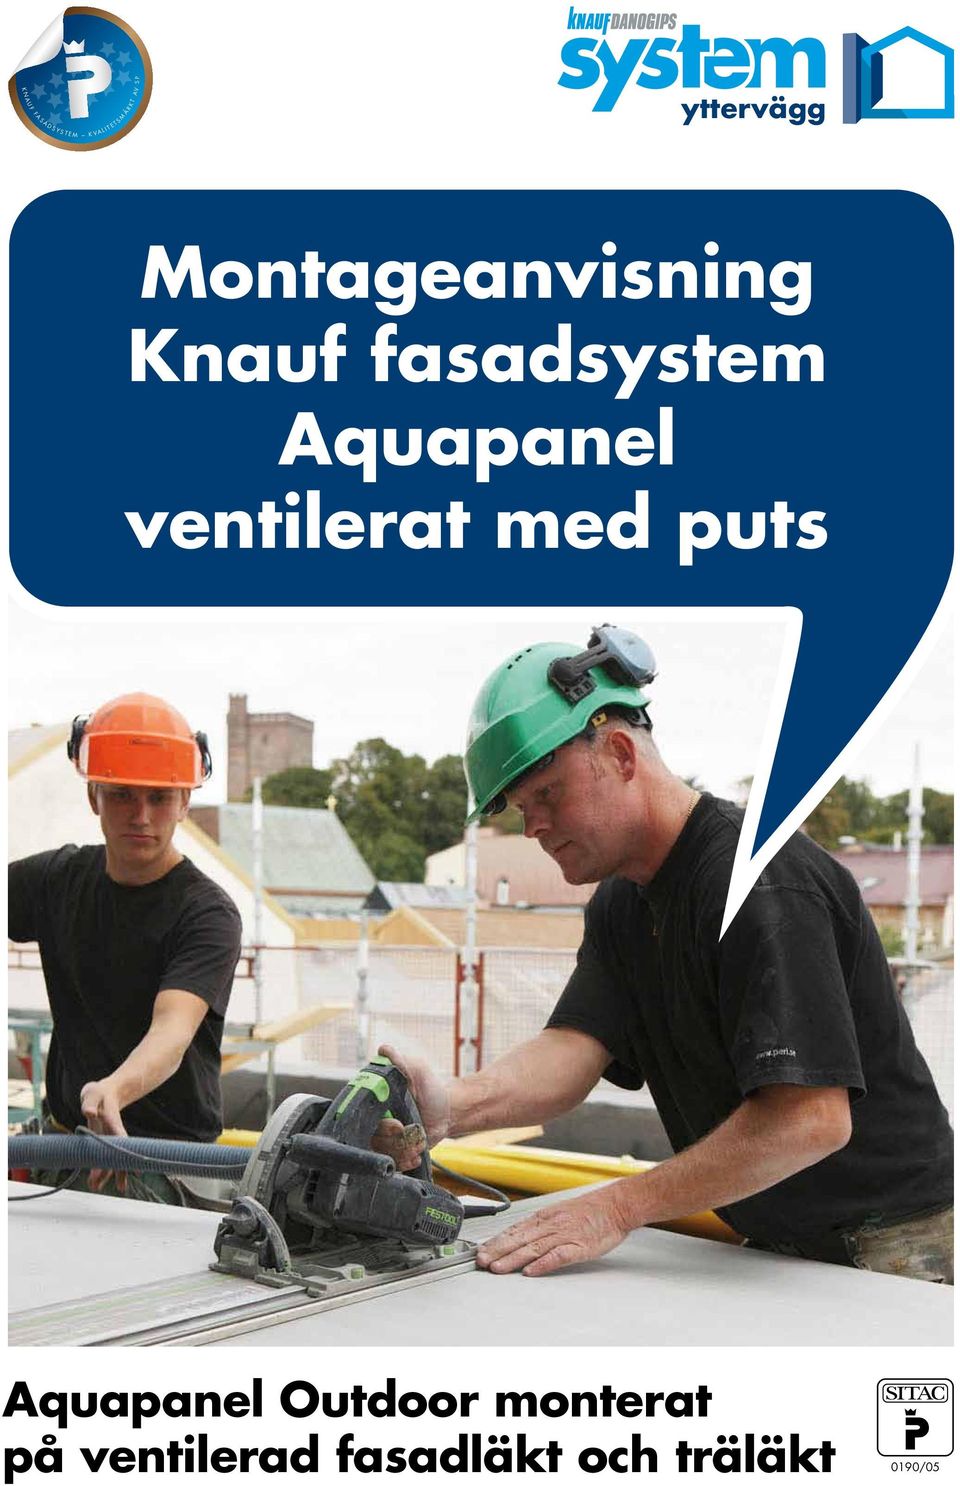 Knauf fasadsystem Aquapanel ventilerat med puts